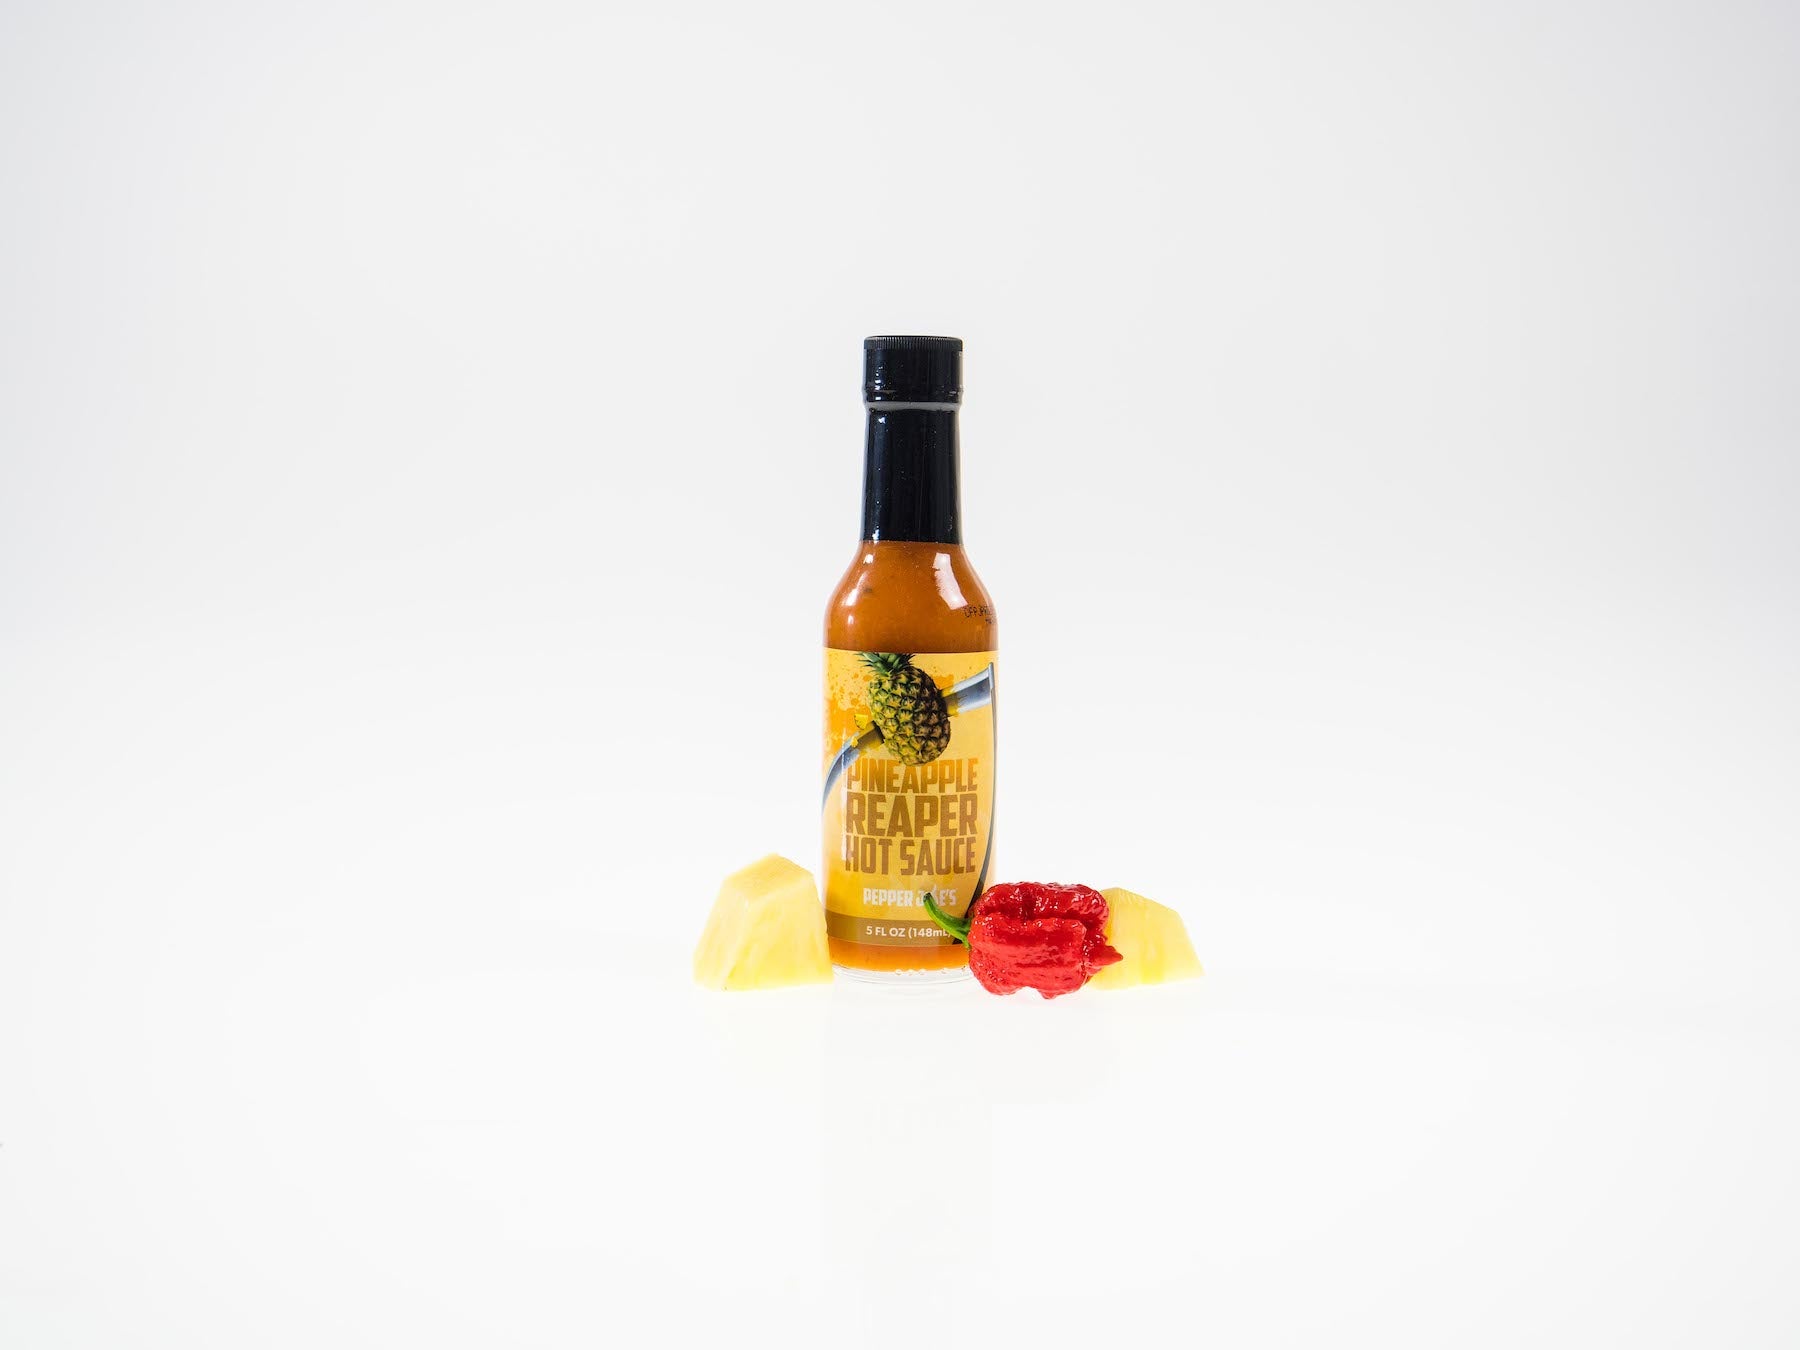 Pepper Joe's Carolina Reaper Hottest Hot Sauce gift set - Pineapple Reaper hot sauce bottle with pineapple chunks around